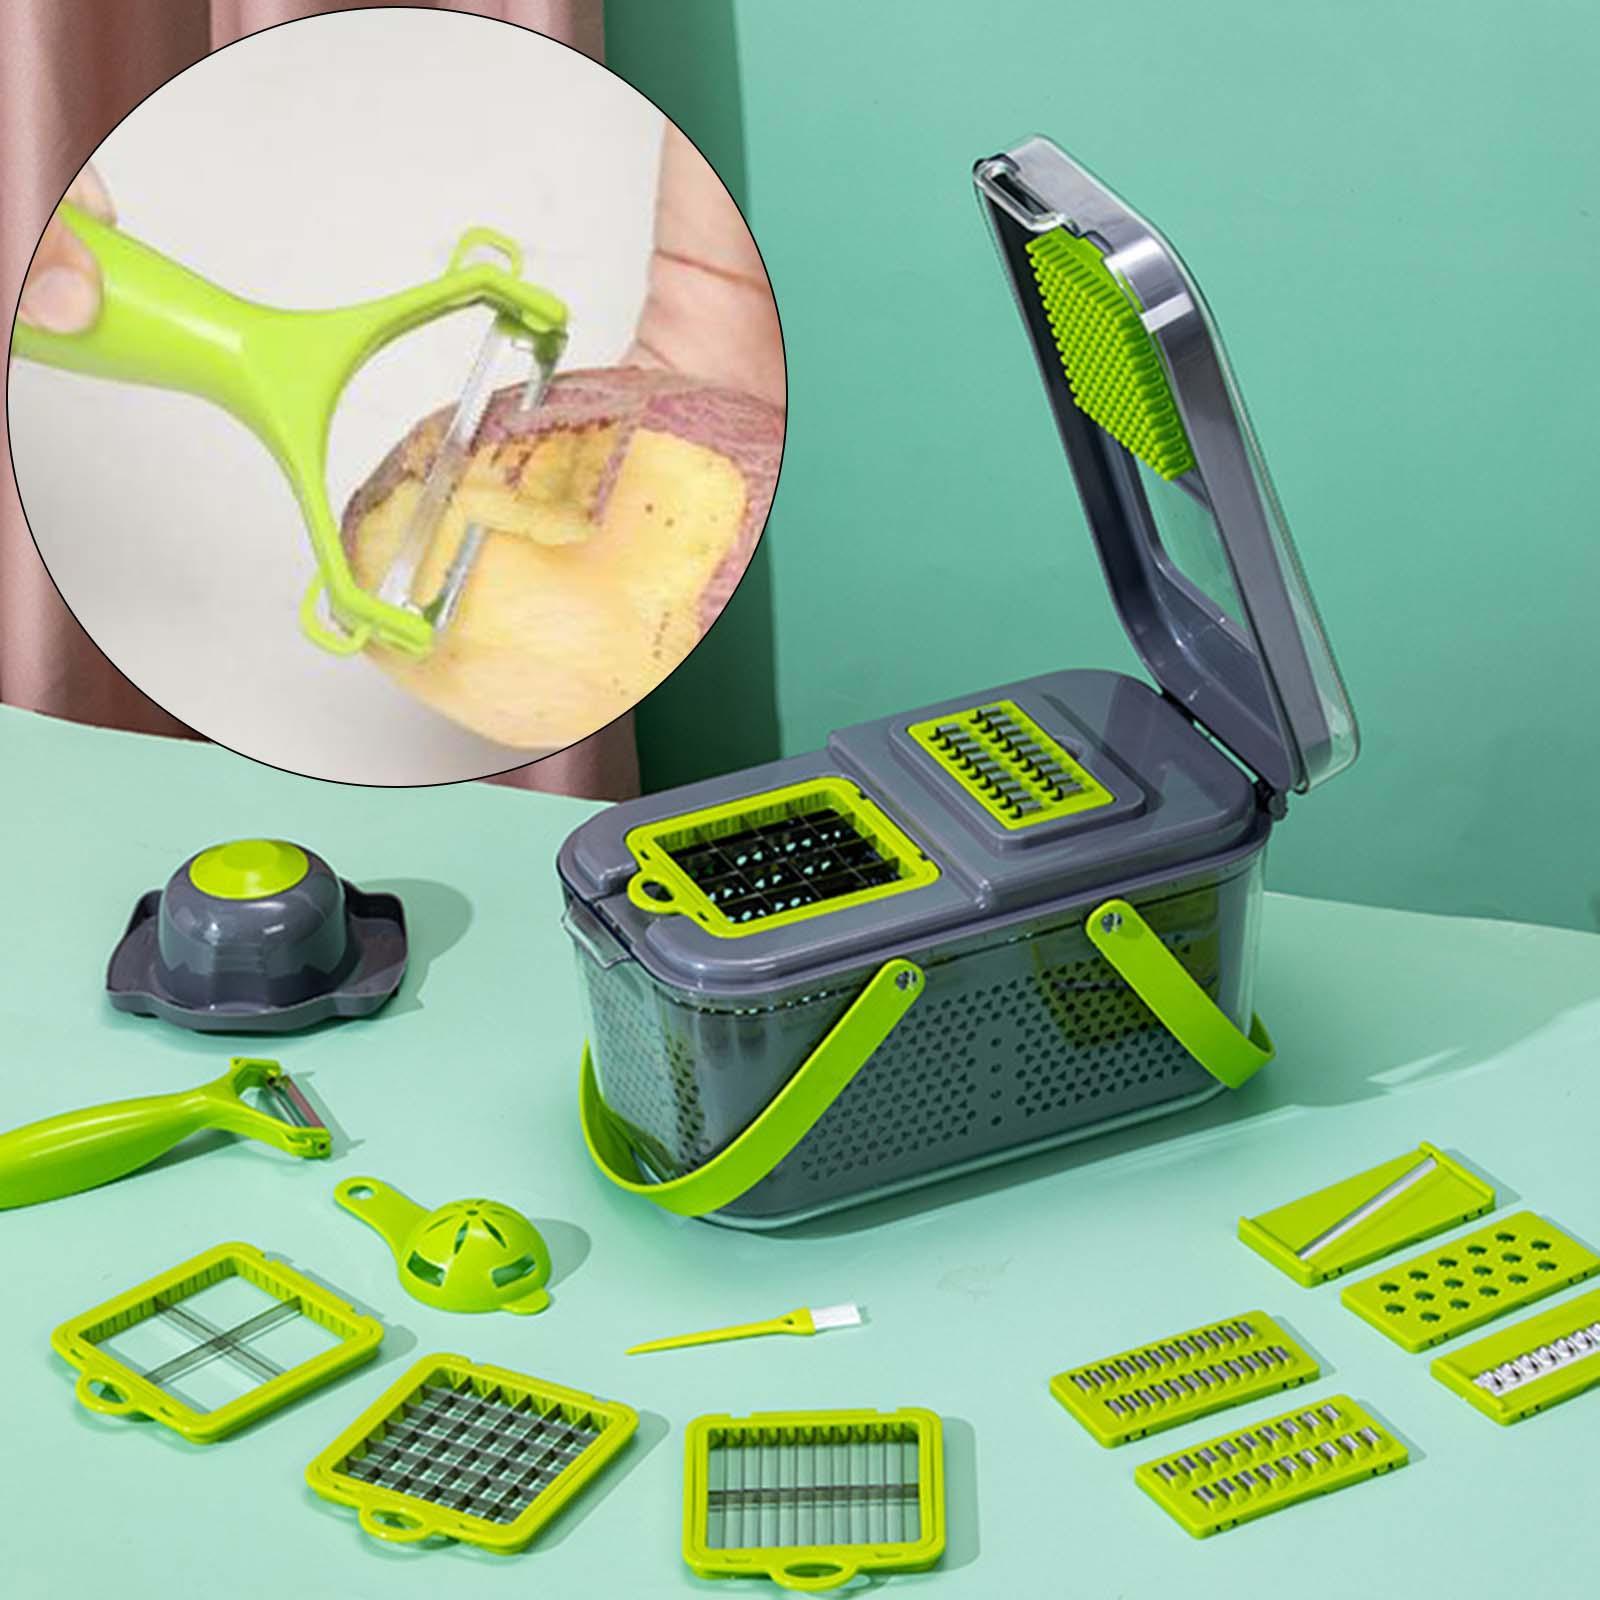 Vegetable Chopper Colander Basket Cutter Shredder   Slicer for Carrot